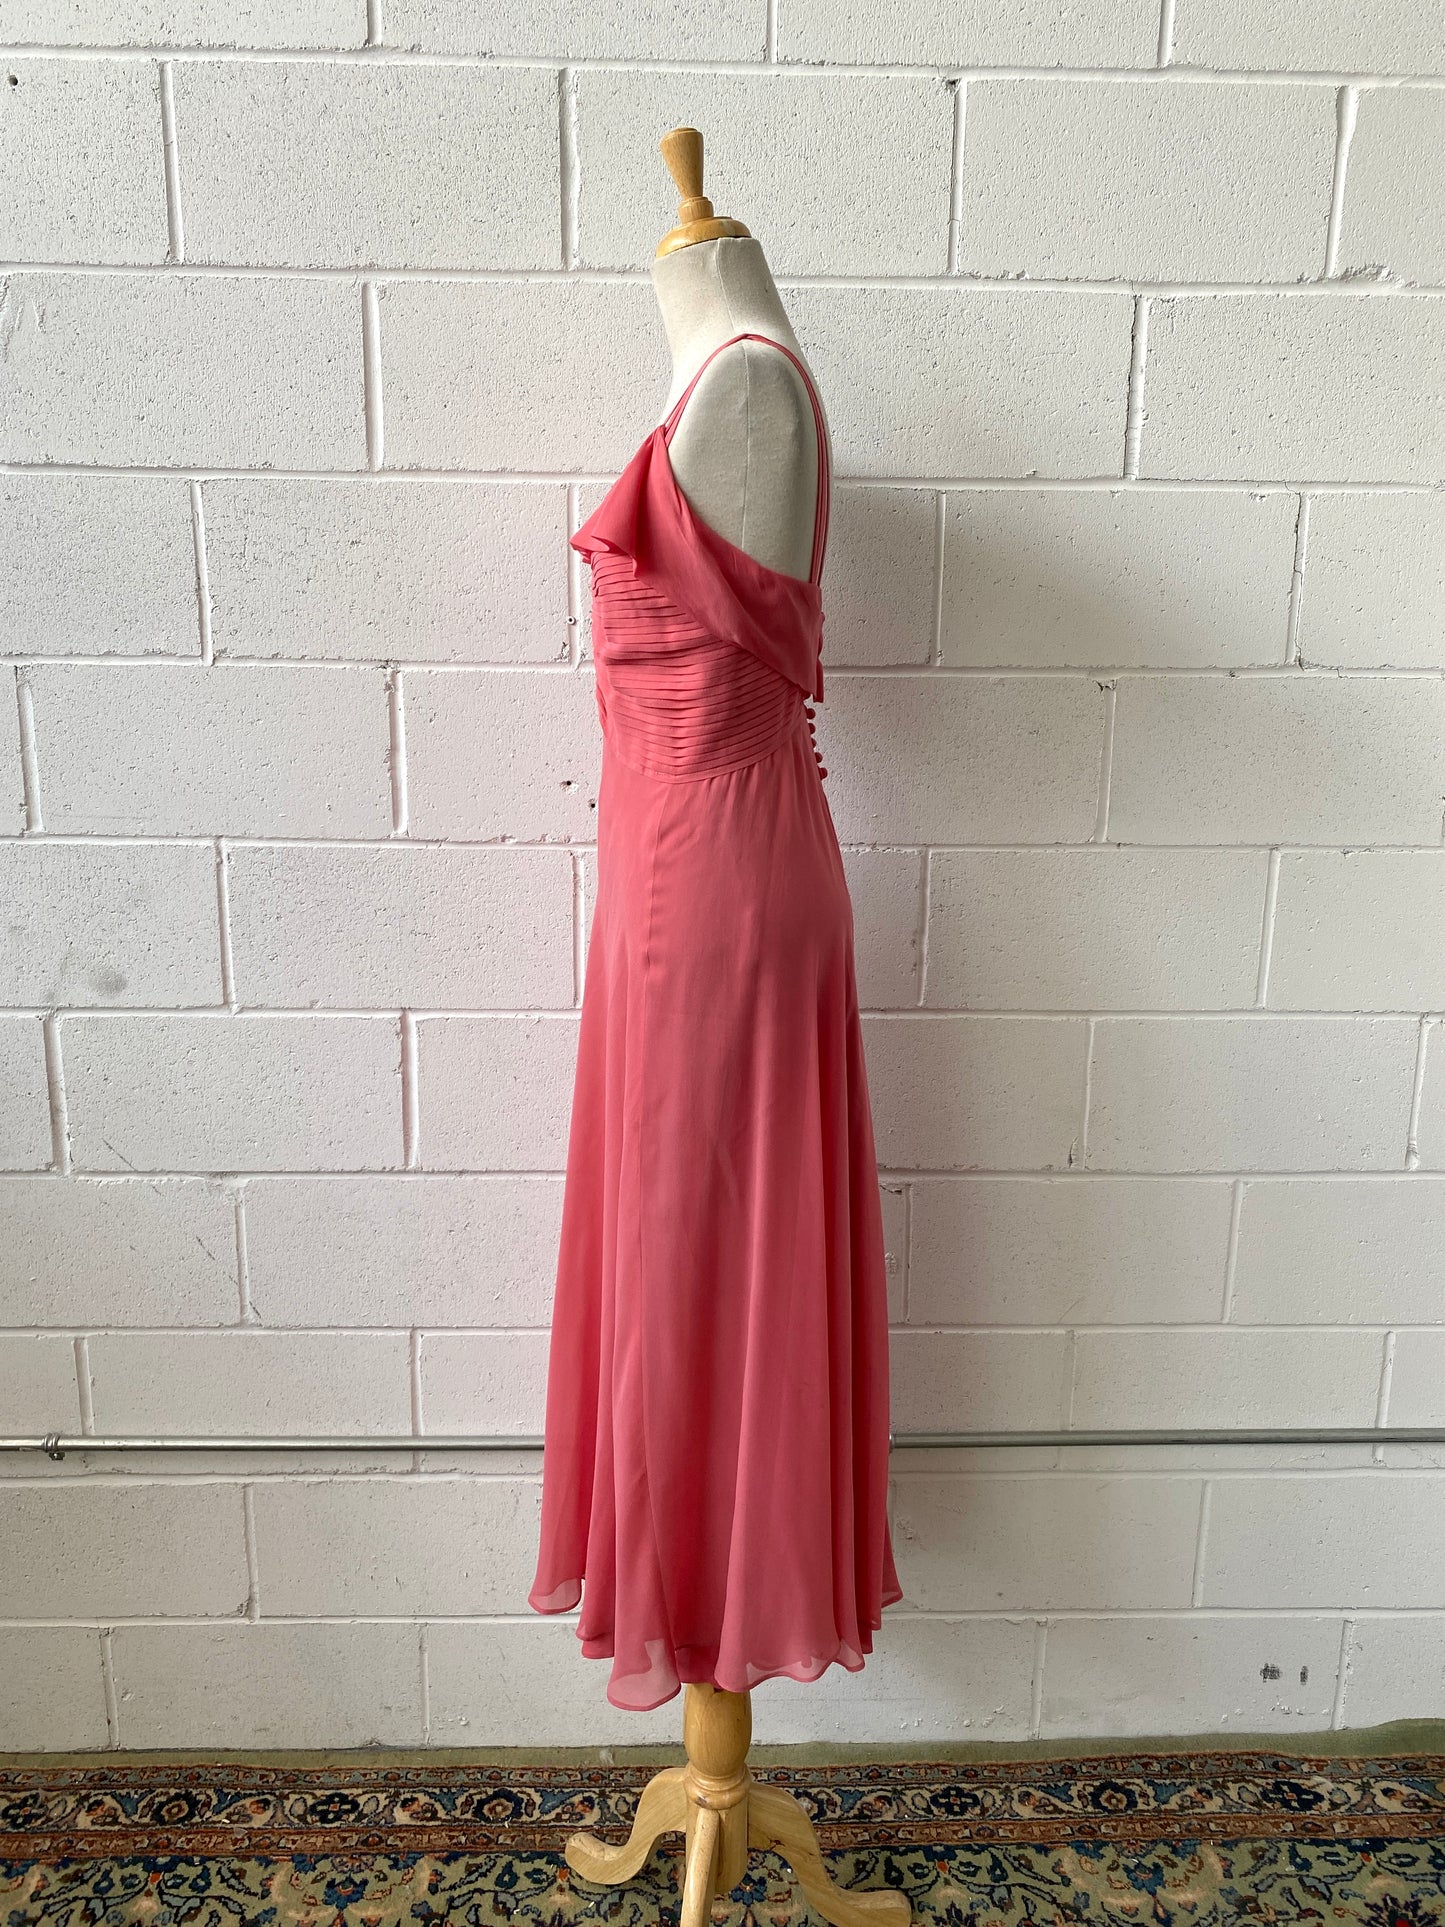 Vintage 1940s Pink Chiffon Floating Dress with Slip, B32"